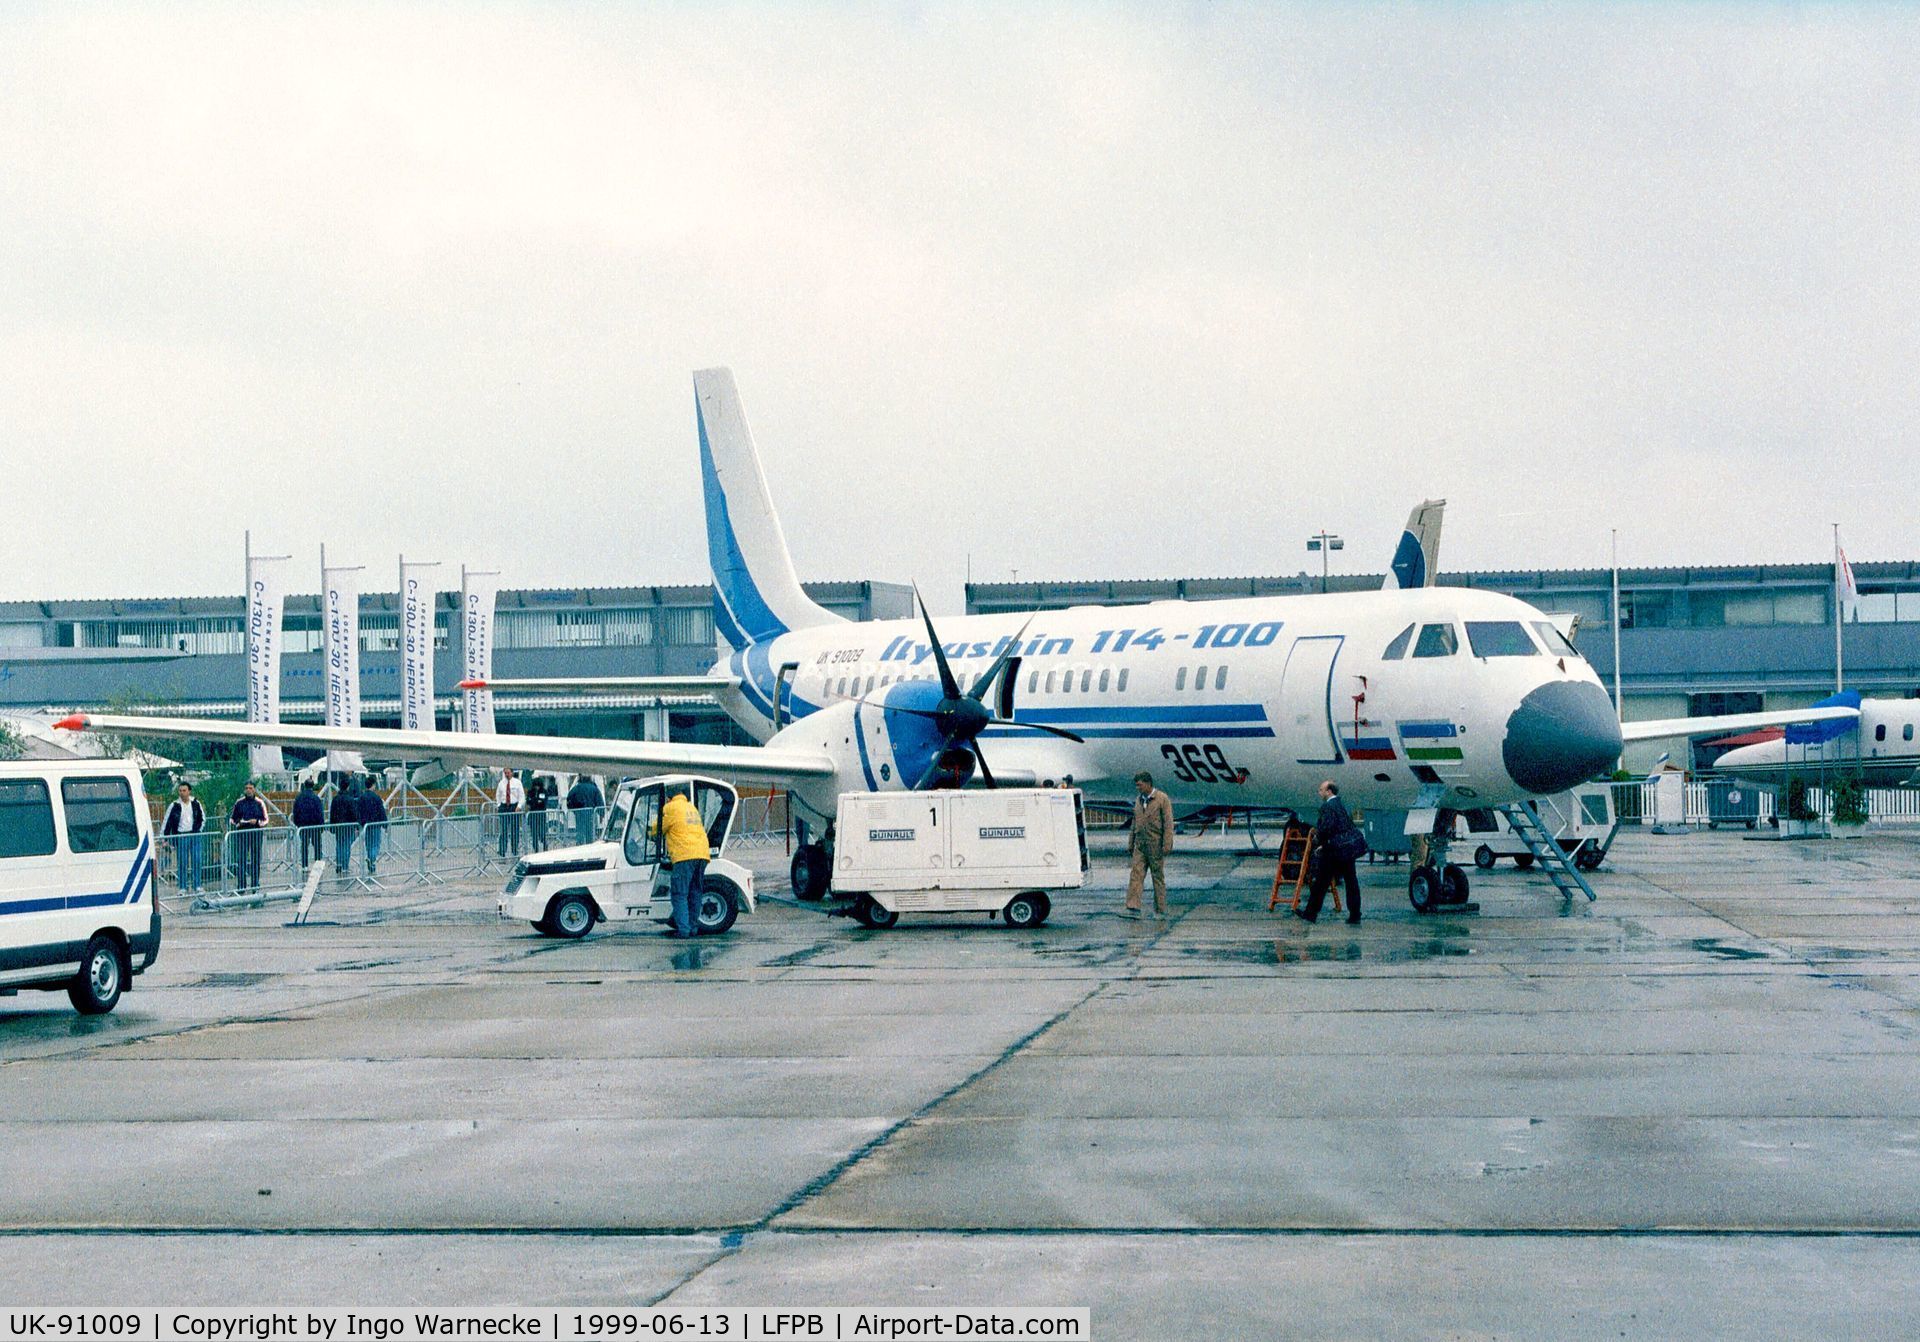 UK-91009, 1999 Ilyushin Il-114-100 C/N 1093800202, Ilyushin Il-114-100 at the Aerosalon 1999, Paris